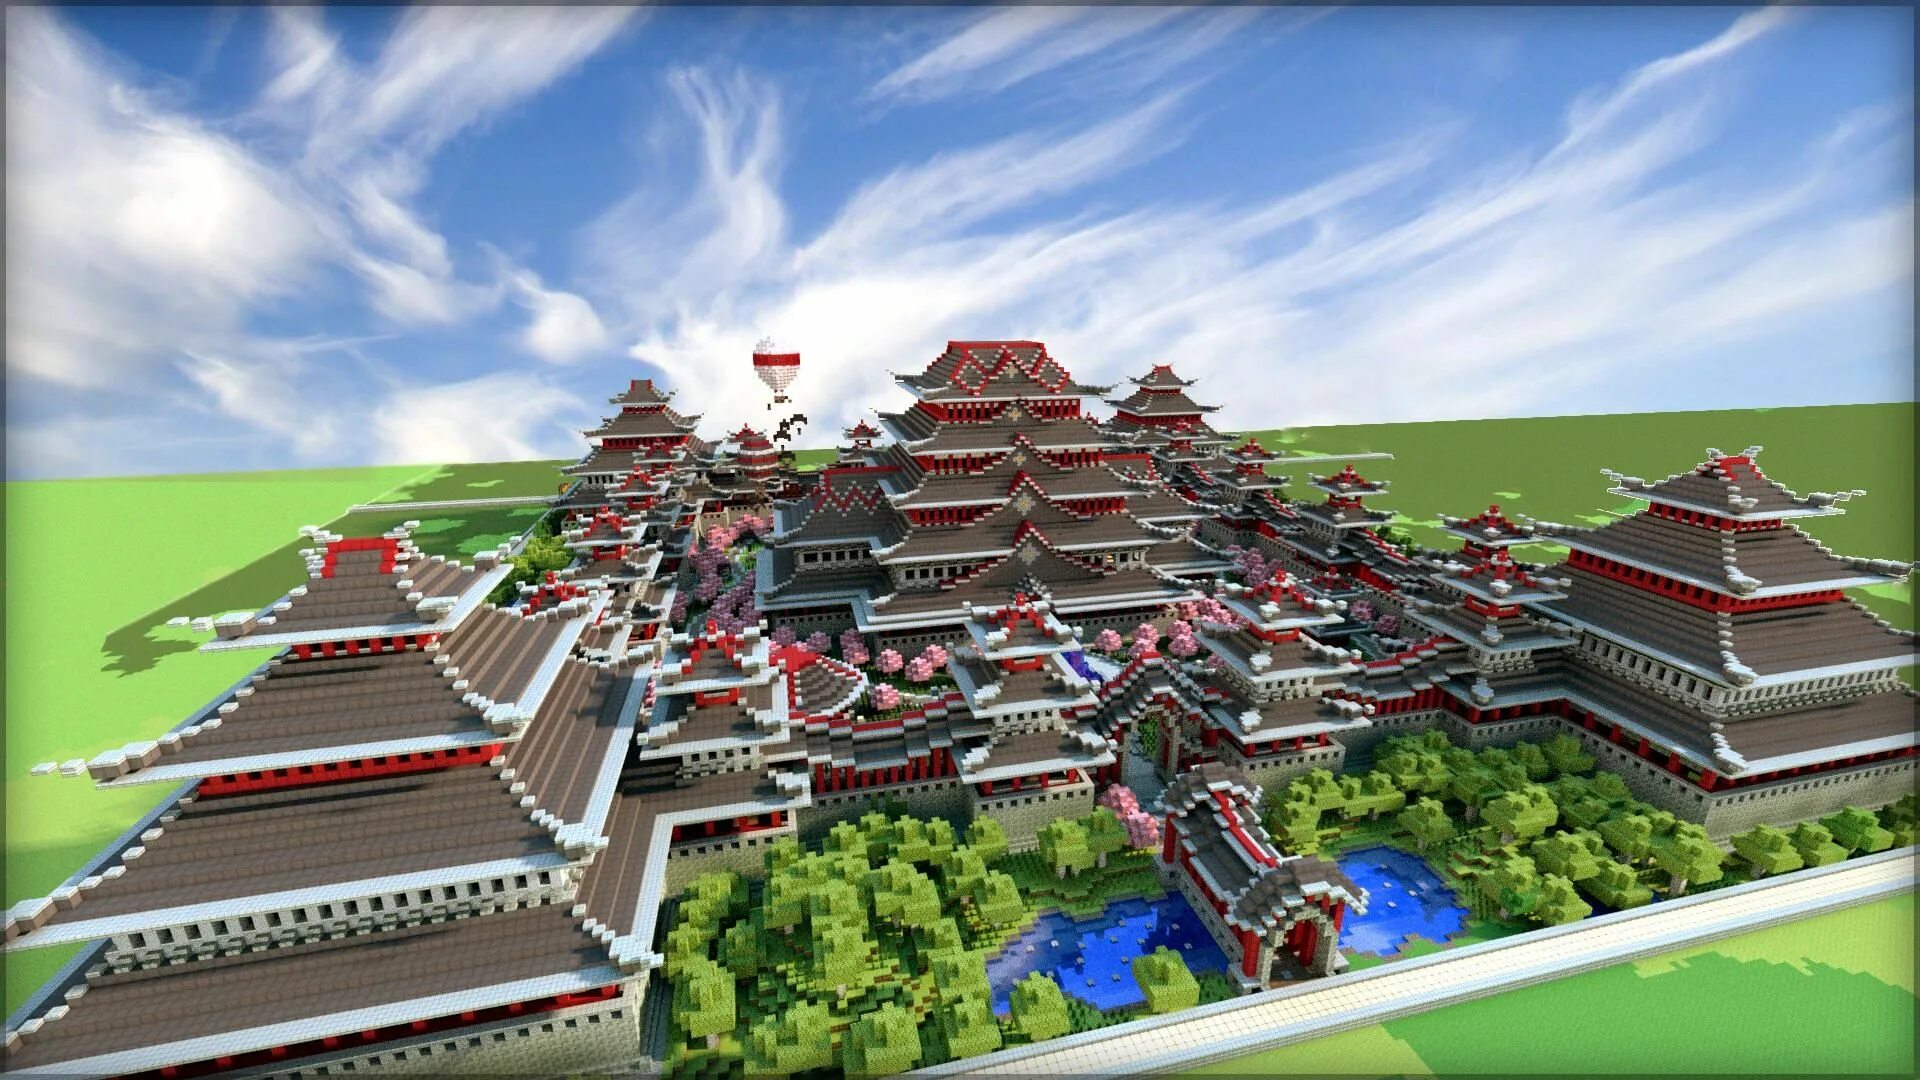 Minecraft architecture. Храм Японии в майнкрафт. Буддистский храм в МАЙНКРАФТЕ. Императорский дворец Токио в майнкрафт. Императорский дворец в Киото в майнкрафт.